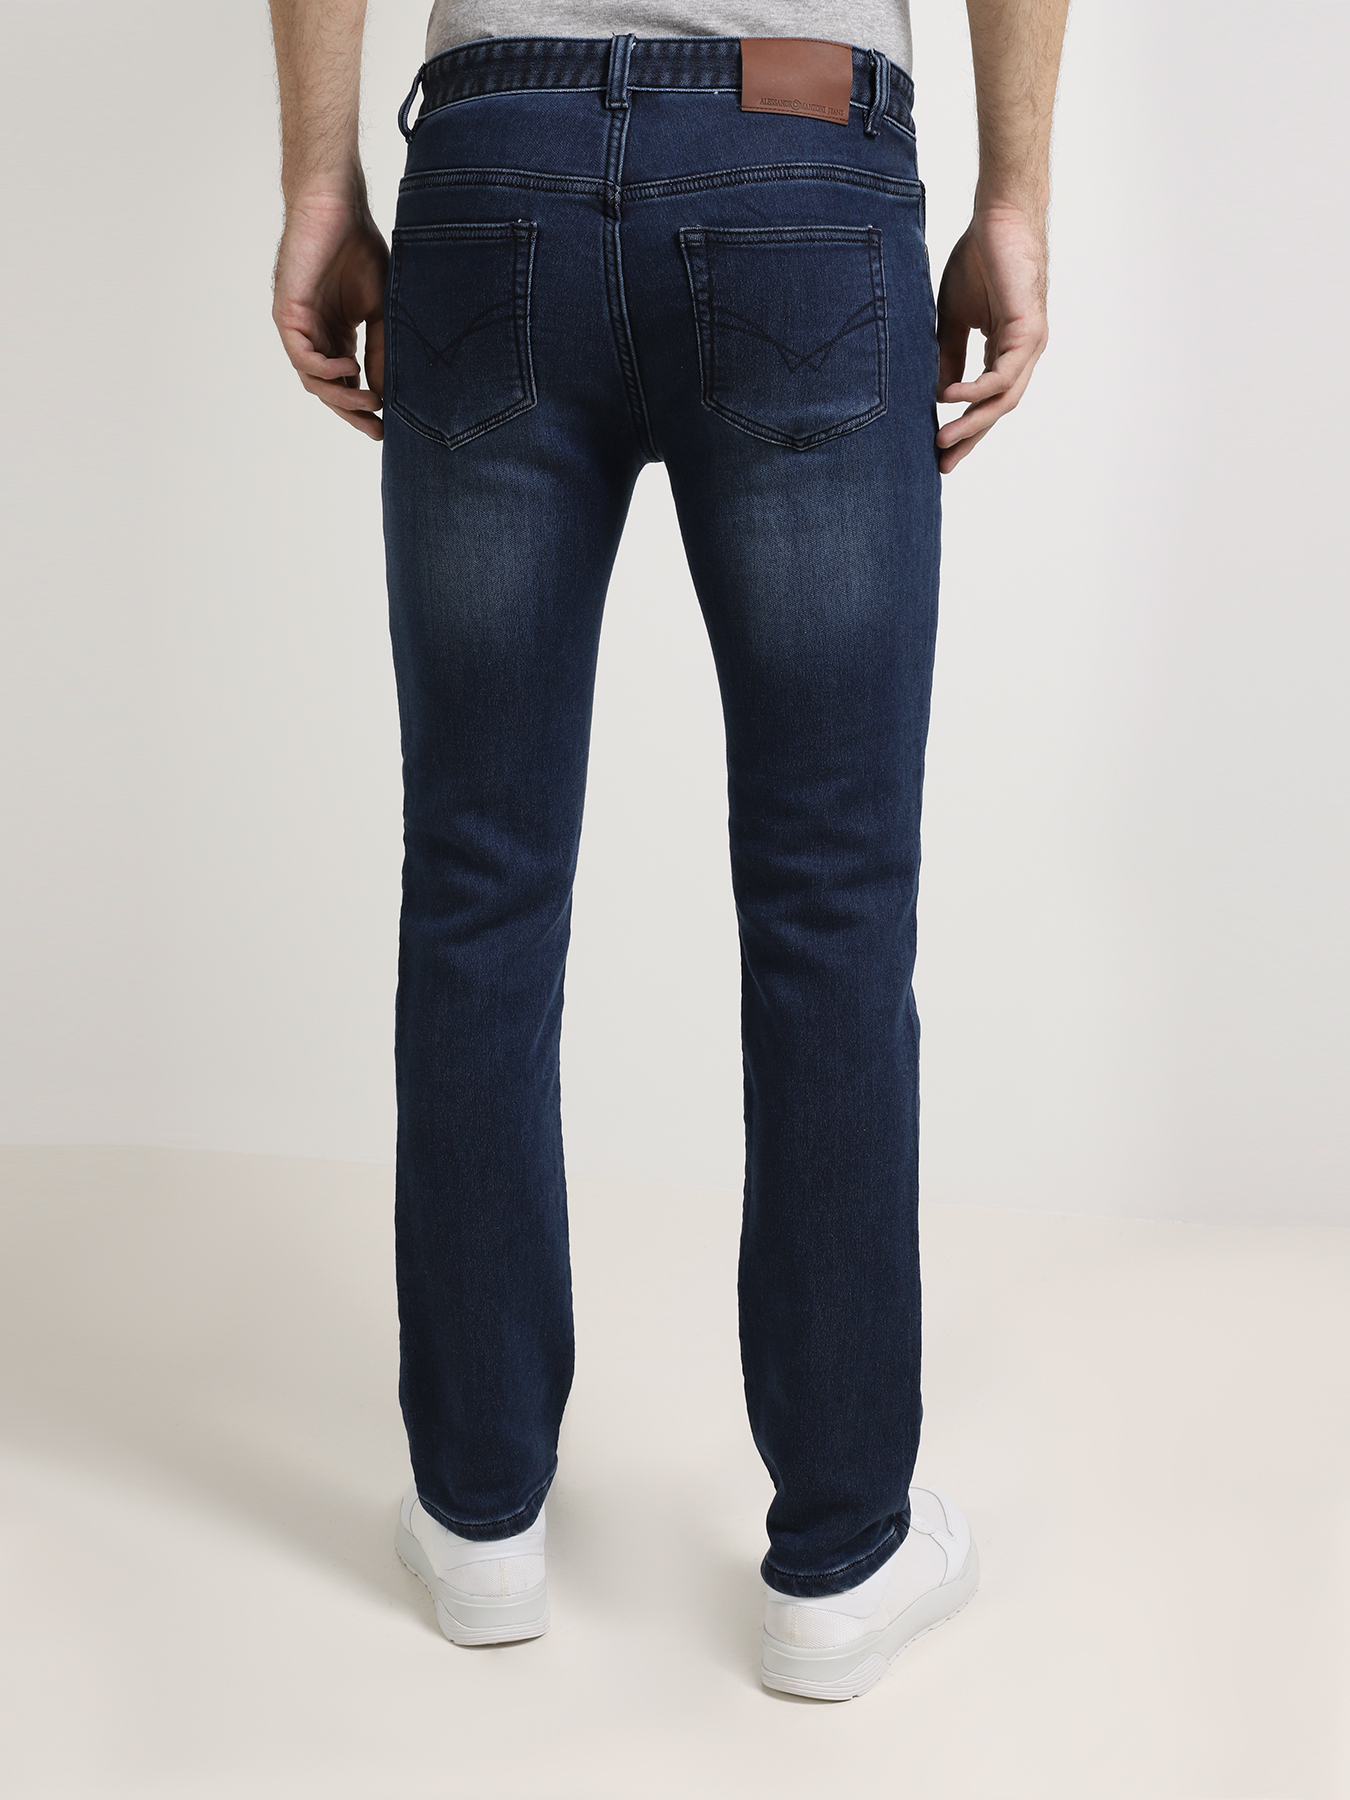 Alessandro Manzoni Jeans Зауженные джинсы 348333-026 Фото 2